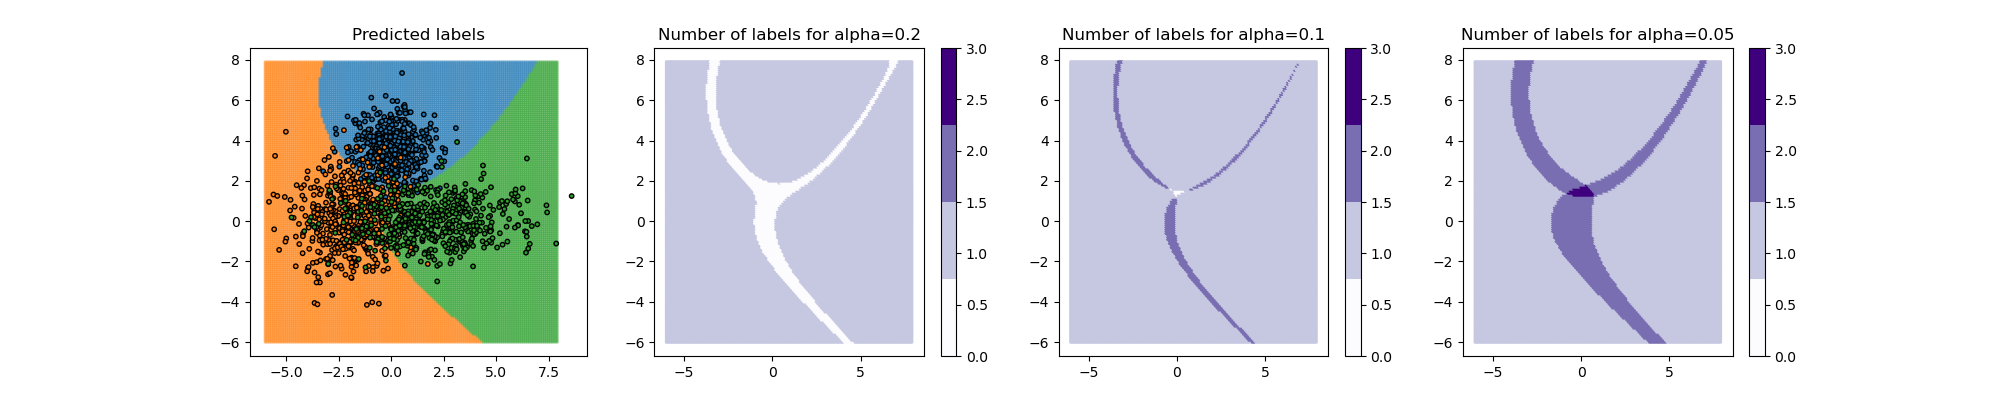 Predicted labels, Number of labels for alpha=0.2, Number of labels for alpha=0.1, Number of labels for alpha=0.05